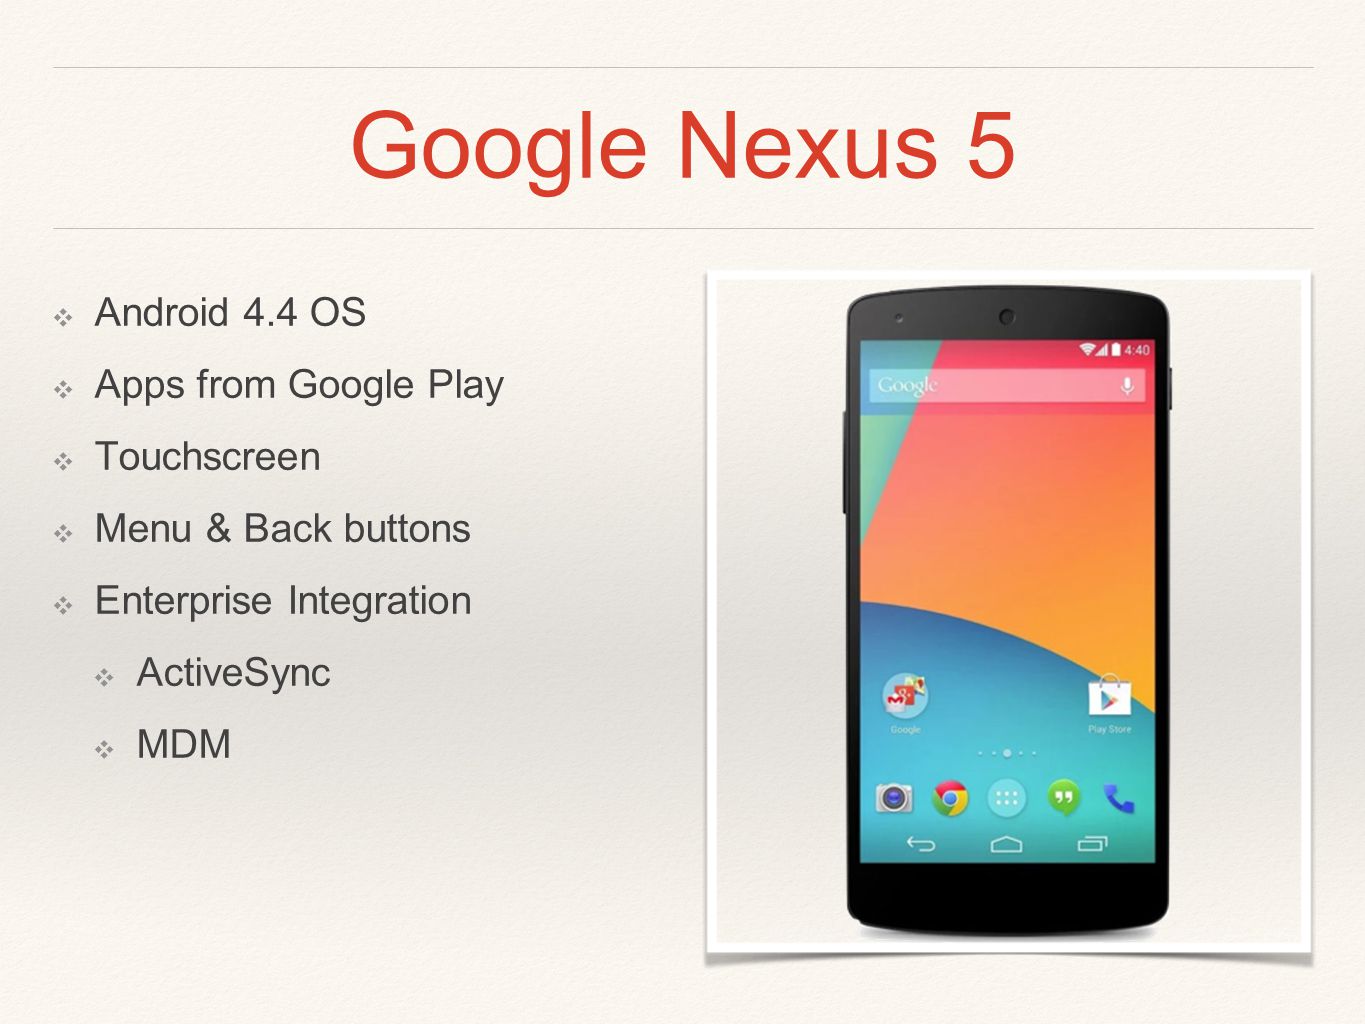 Google Nexus 5 ❖ Android 4.4 OS ❖ Apps from Google Play ❖ Touchscreen ❖ Menu & Back buttons ❖ Enterprise Integration ❖ ActiveSync ❖ MDM